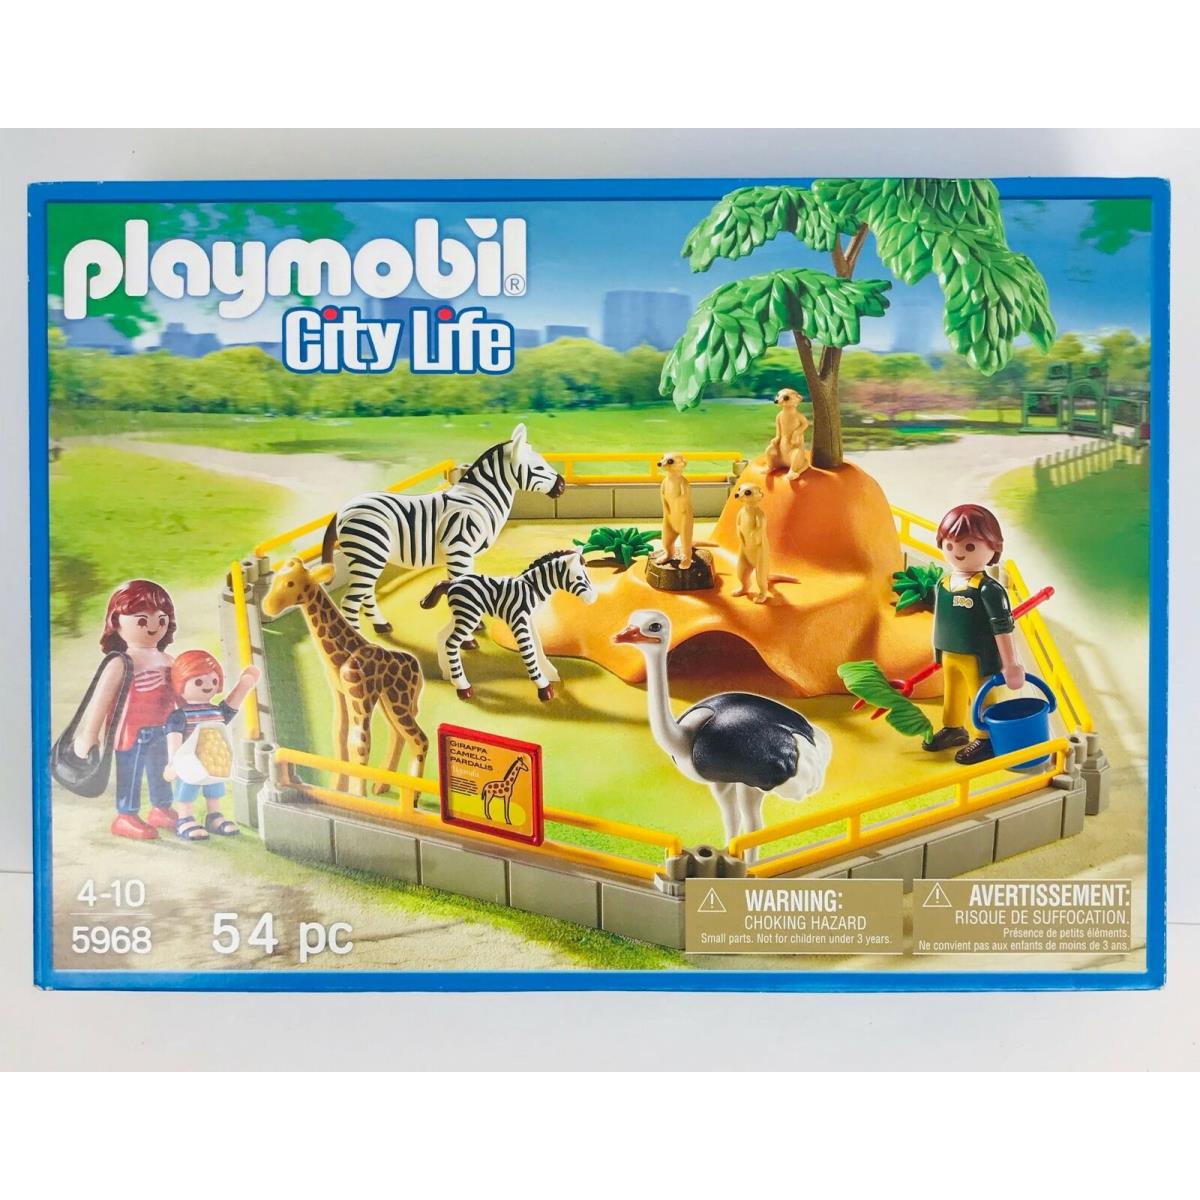 Playmobil City Life Zoo Set 5968 54 Pcs Toy Retired